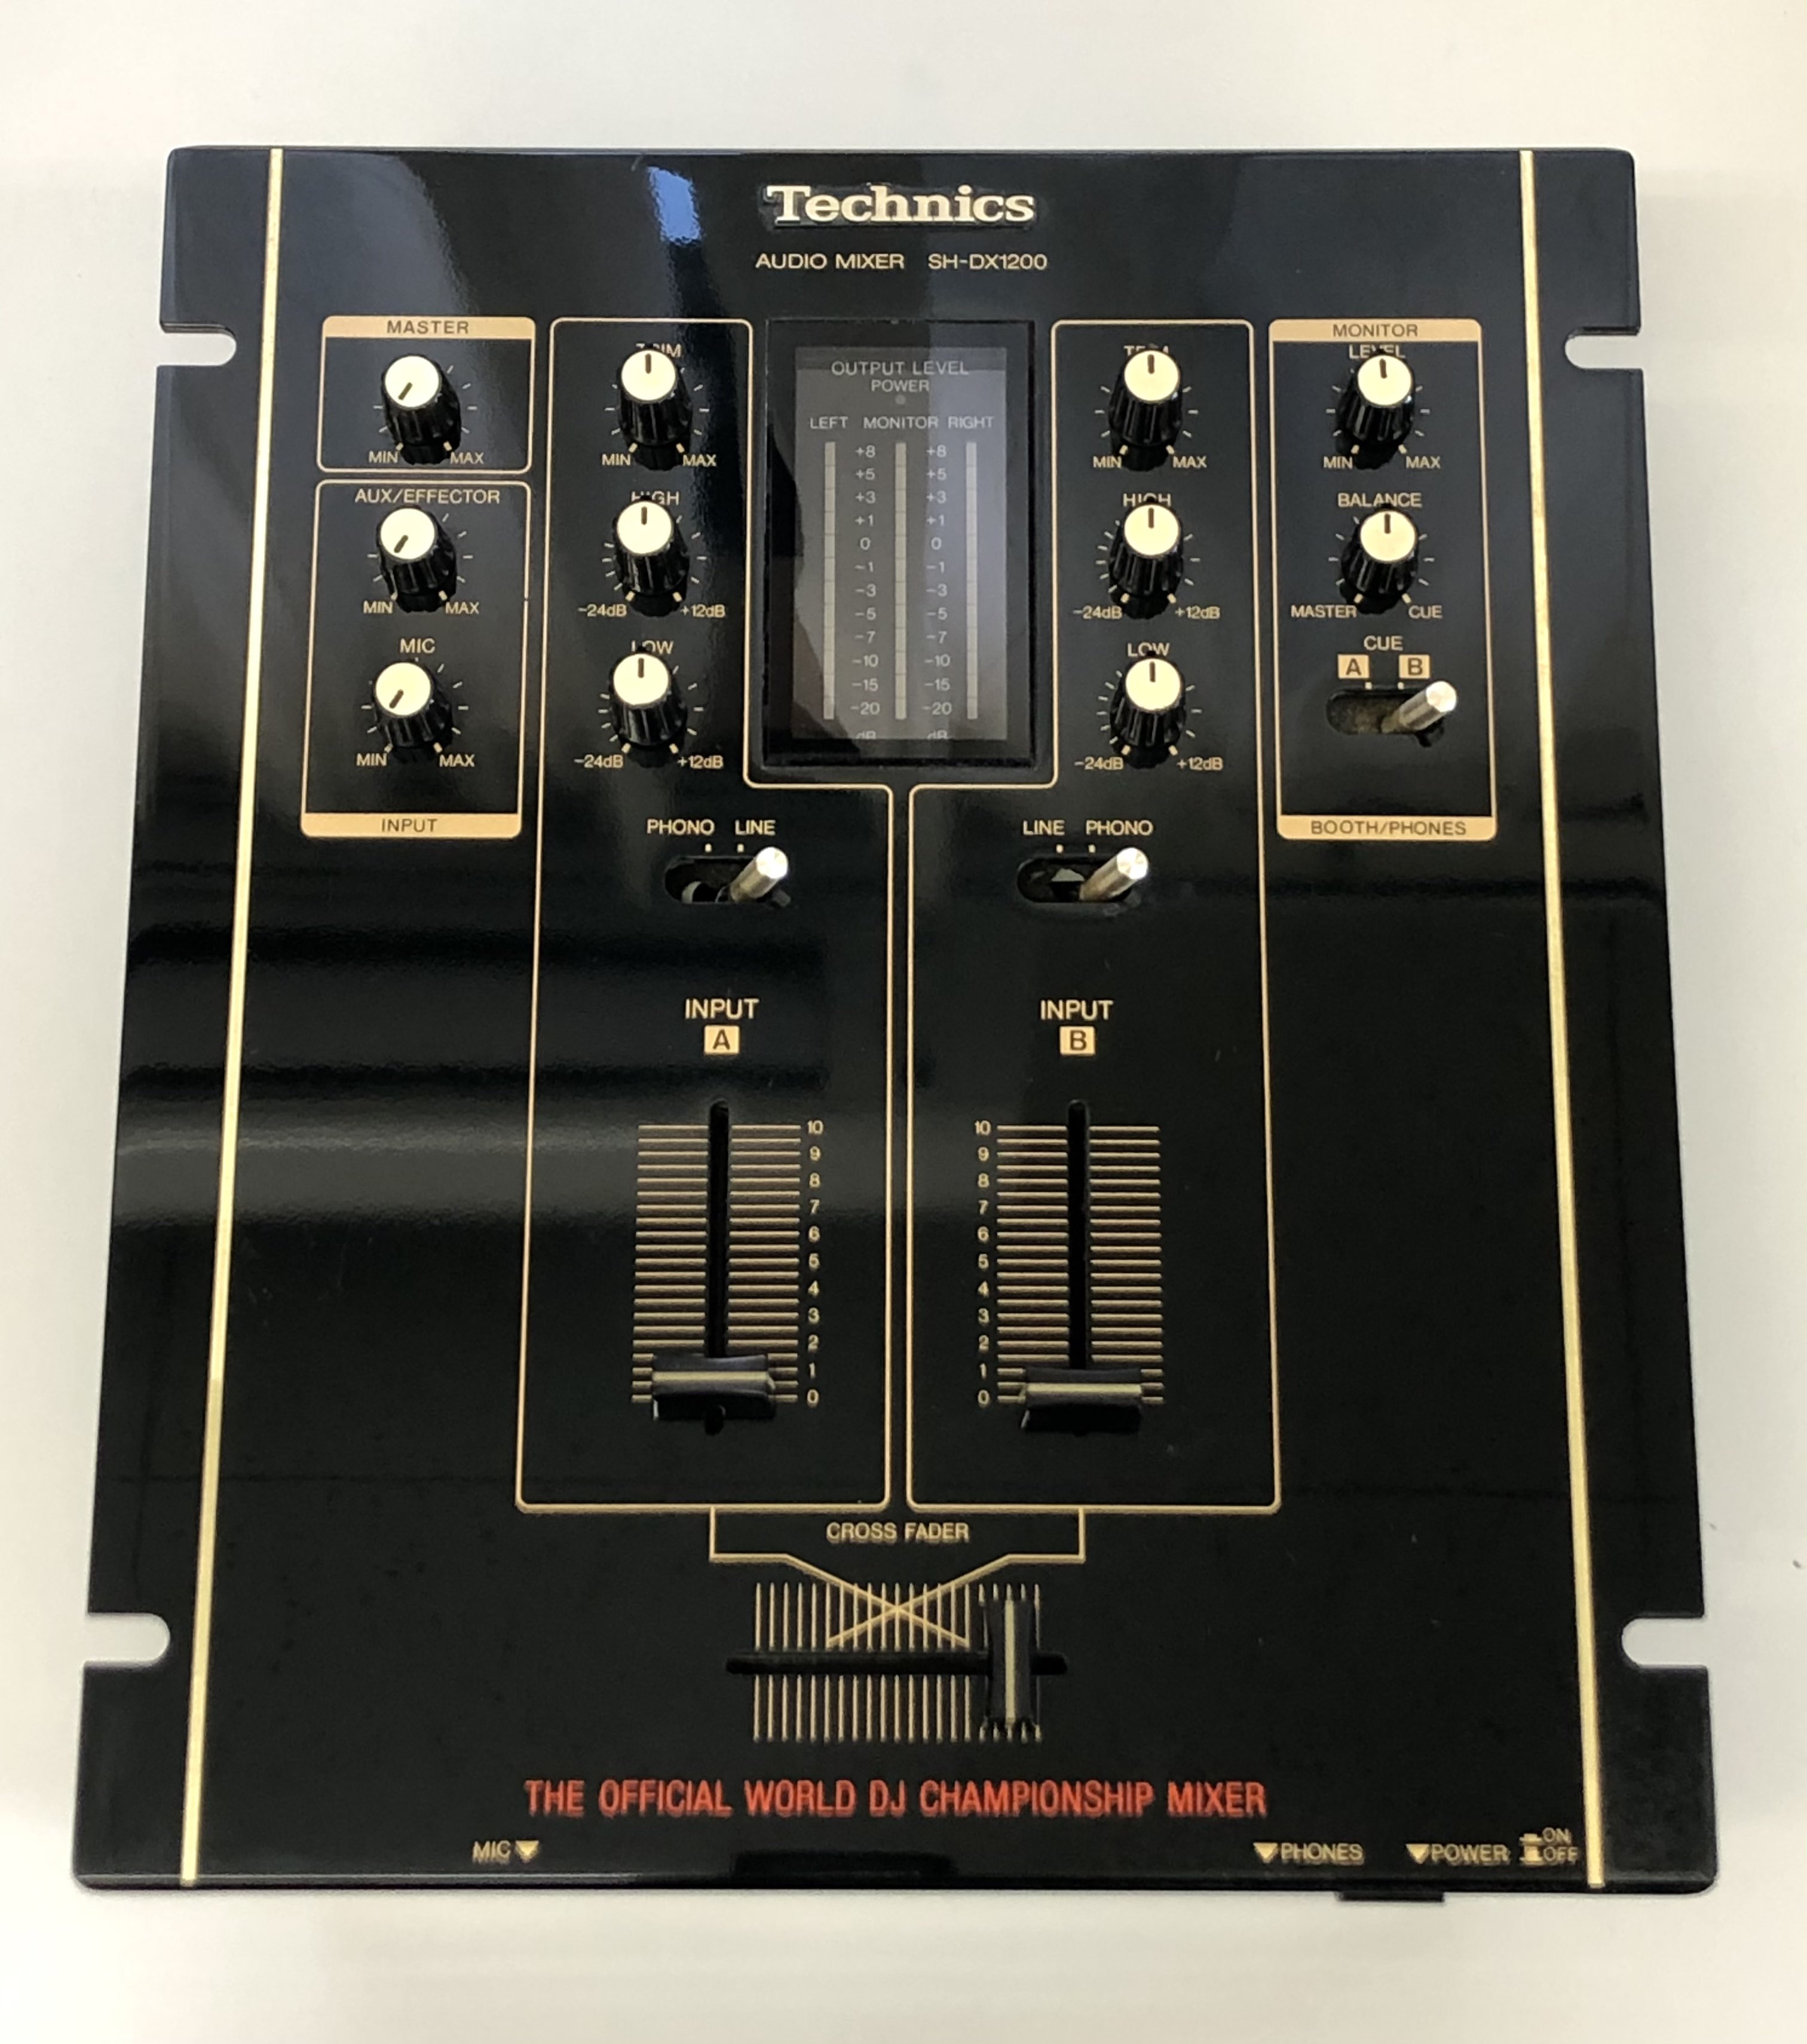 Technics テクニクス DJミキサー SH-DX1200 www.krzysztofbialy.com